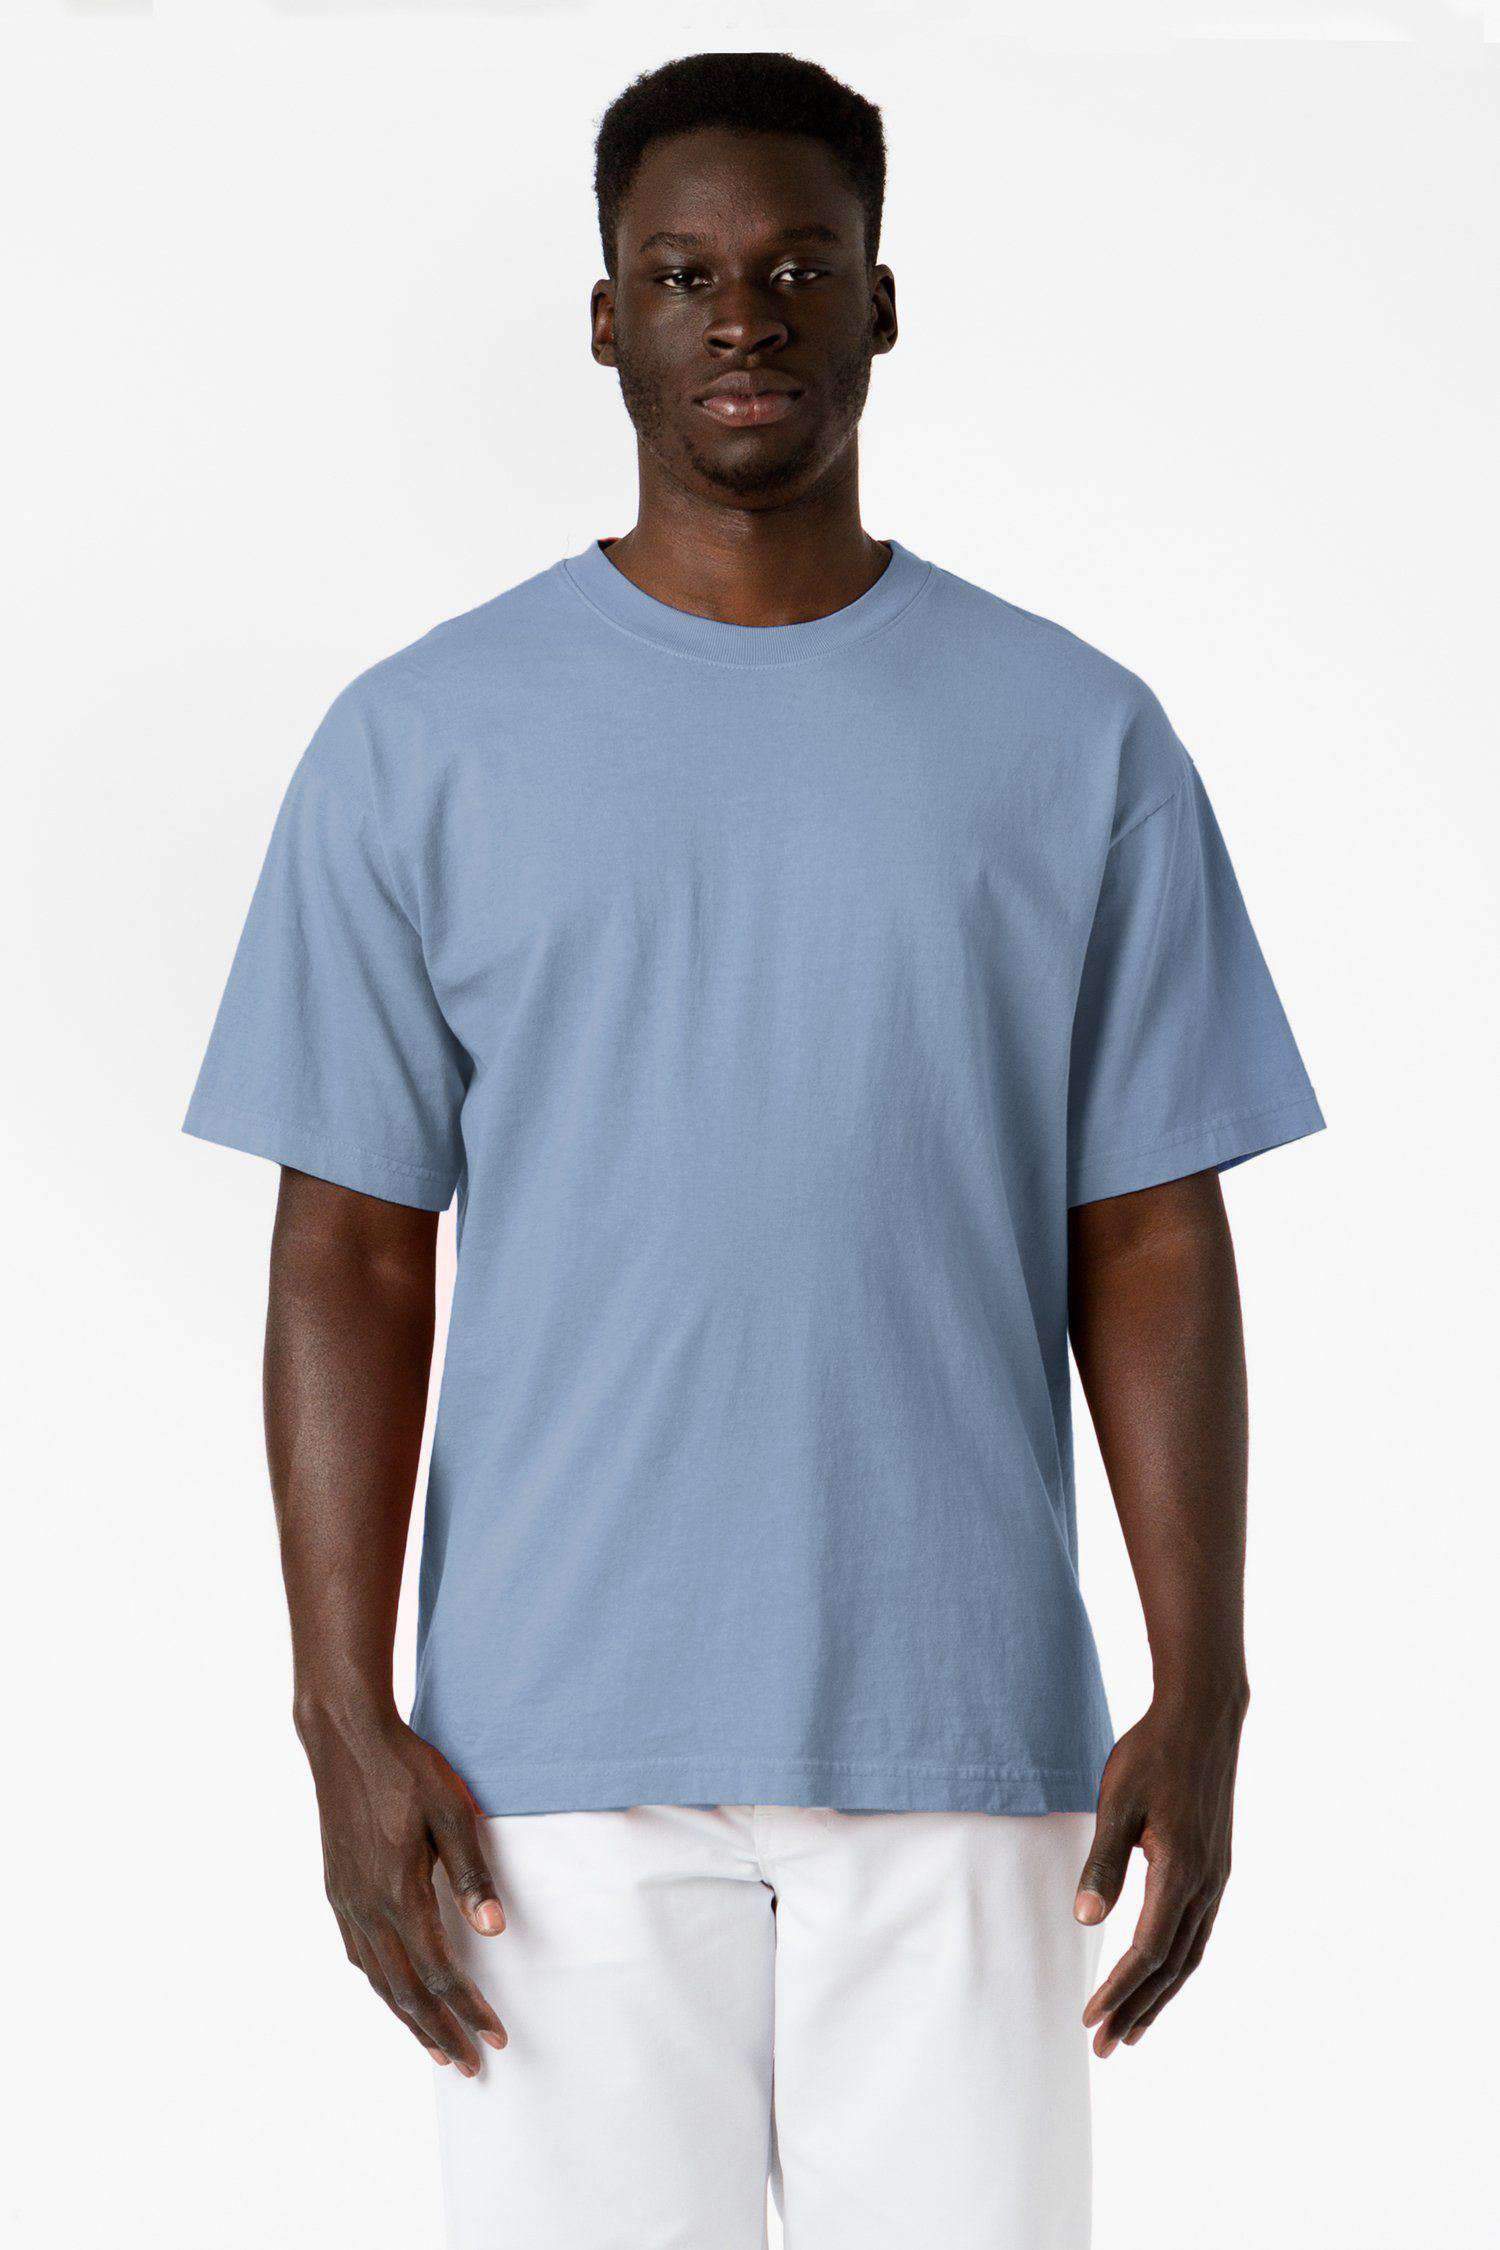 1801GD - 6.5oz Garment Dye Pastel Crew Neck T-Shirt T-Shirt Los Angeles Apparel Clear Blue S 